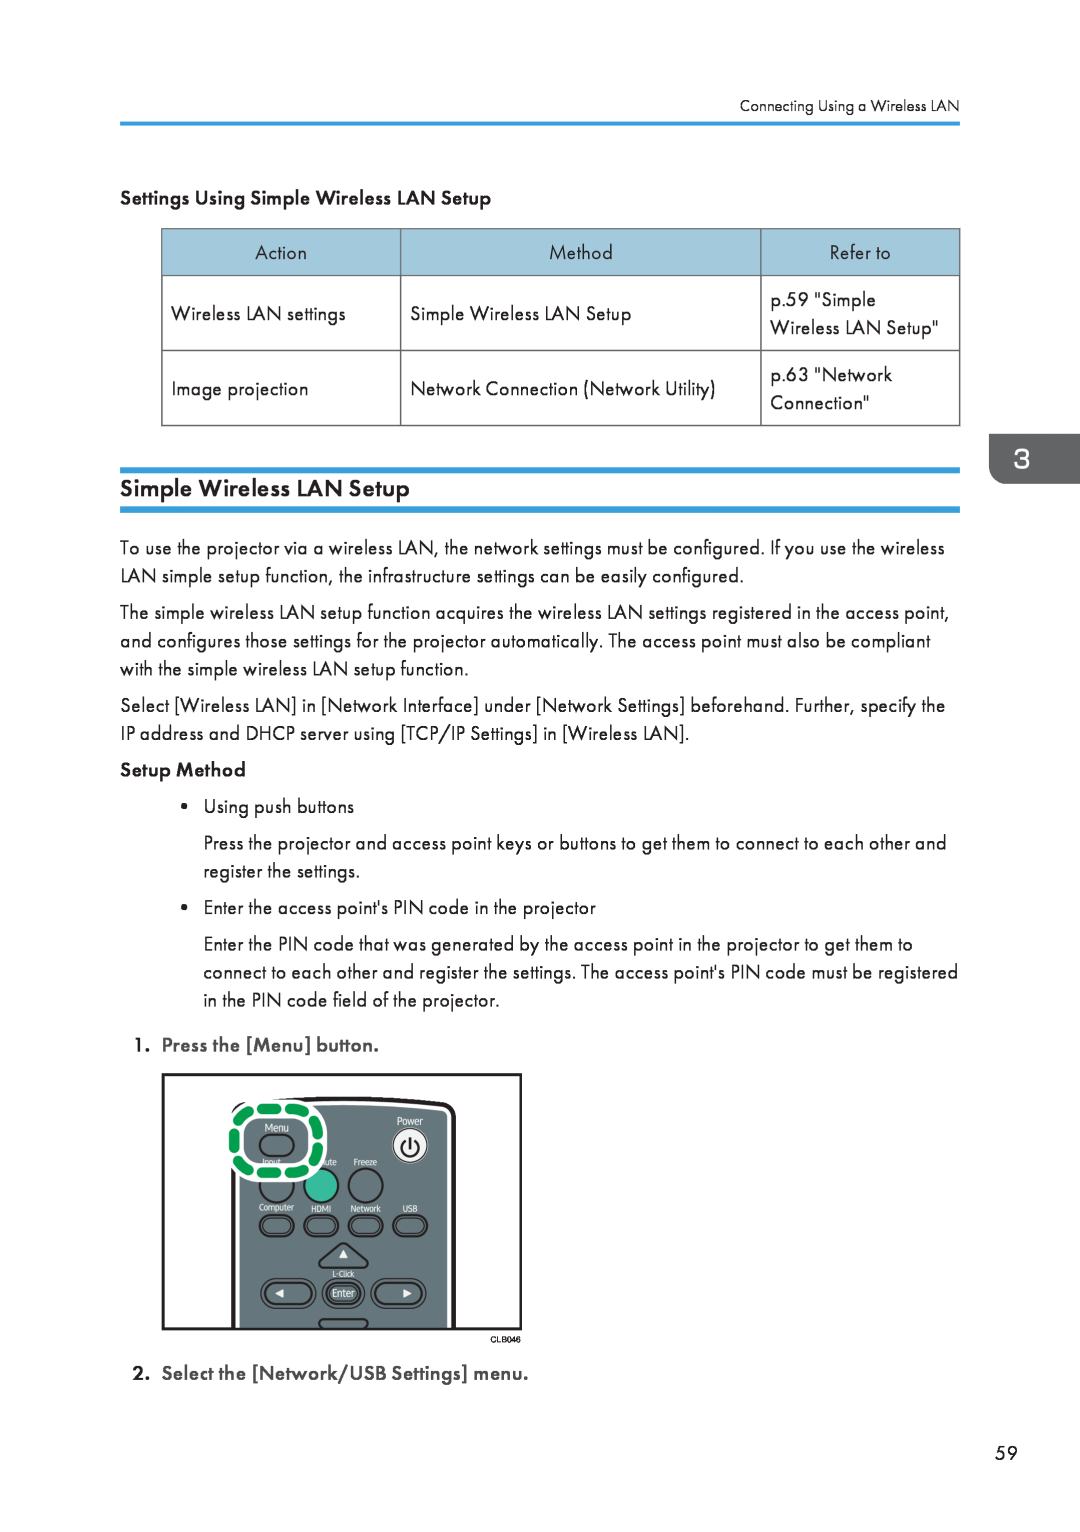 Ricoh WX4130n operating instructions Simple Wireless LAN Setup, Press the Menu button, Select the Network/USB Settings menu 